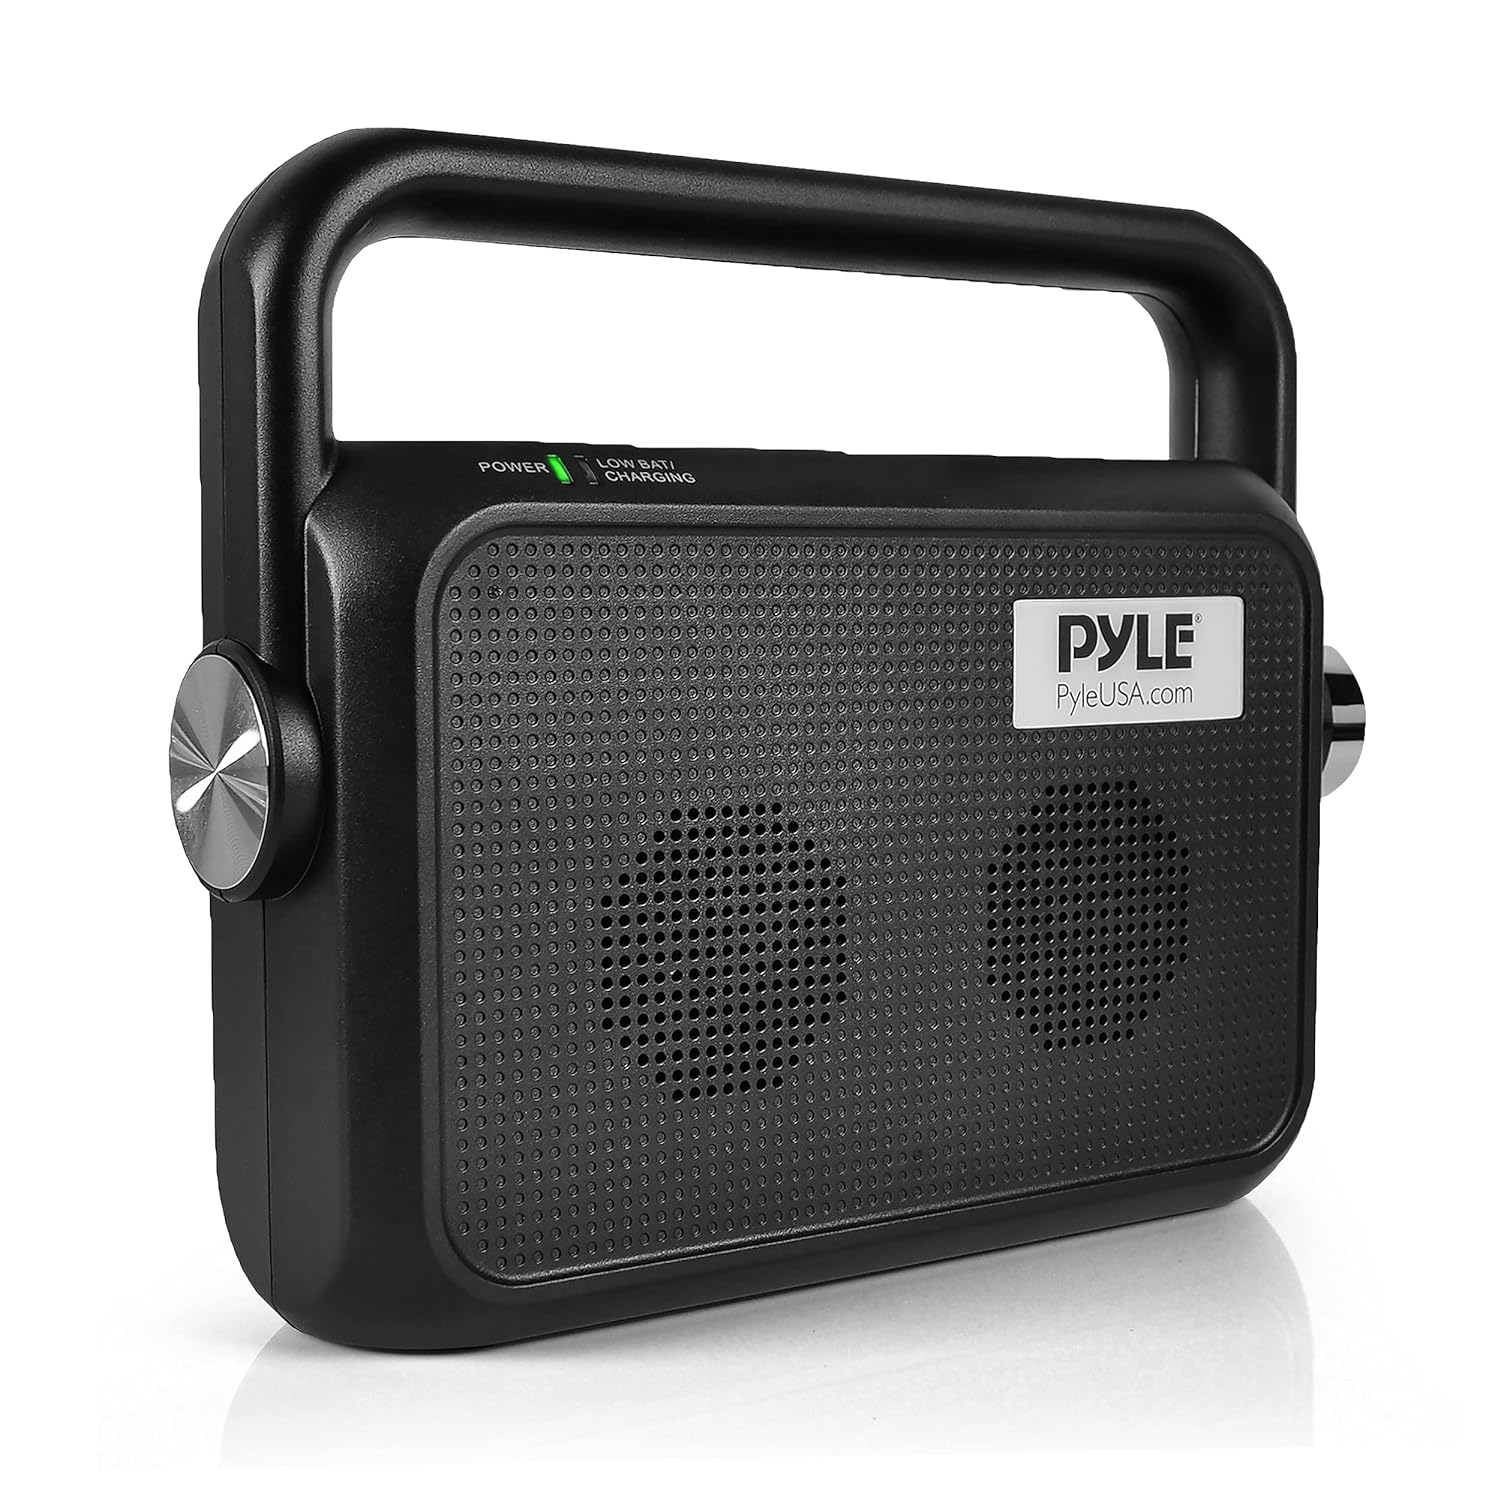 Pyle Wireless Portable Speaker Soundbox - 2.4ghz Full Range Stereo Sound Digital TV MP3 iPod Analog Cable & Digital Optical w/Head…